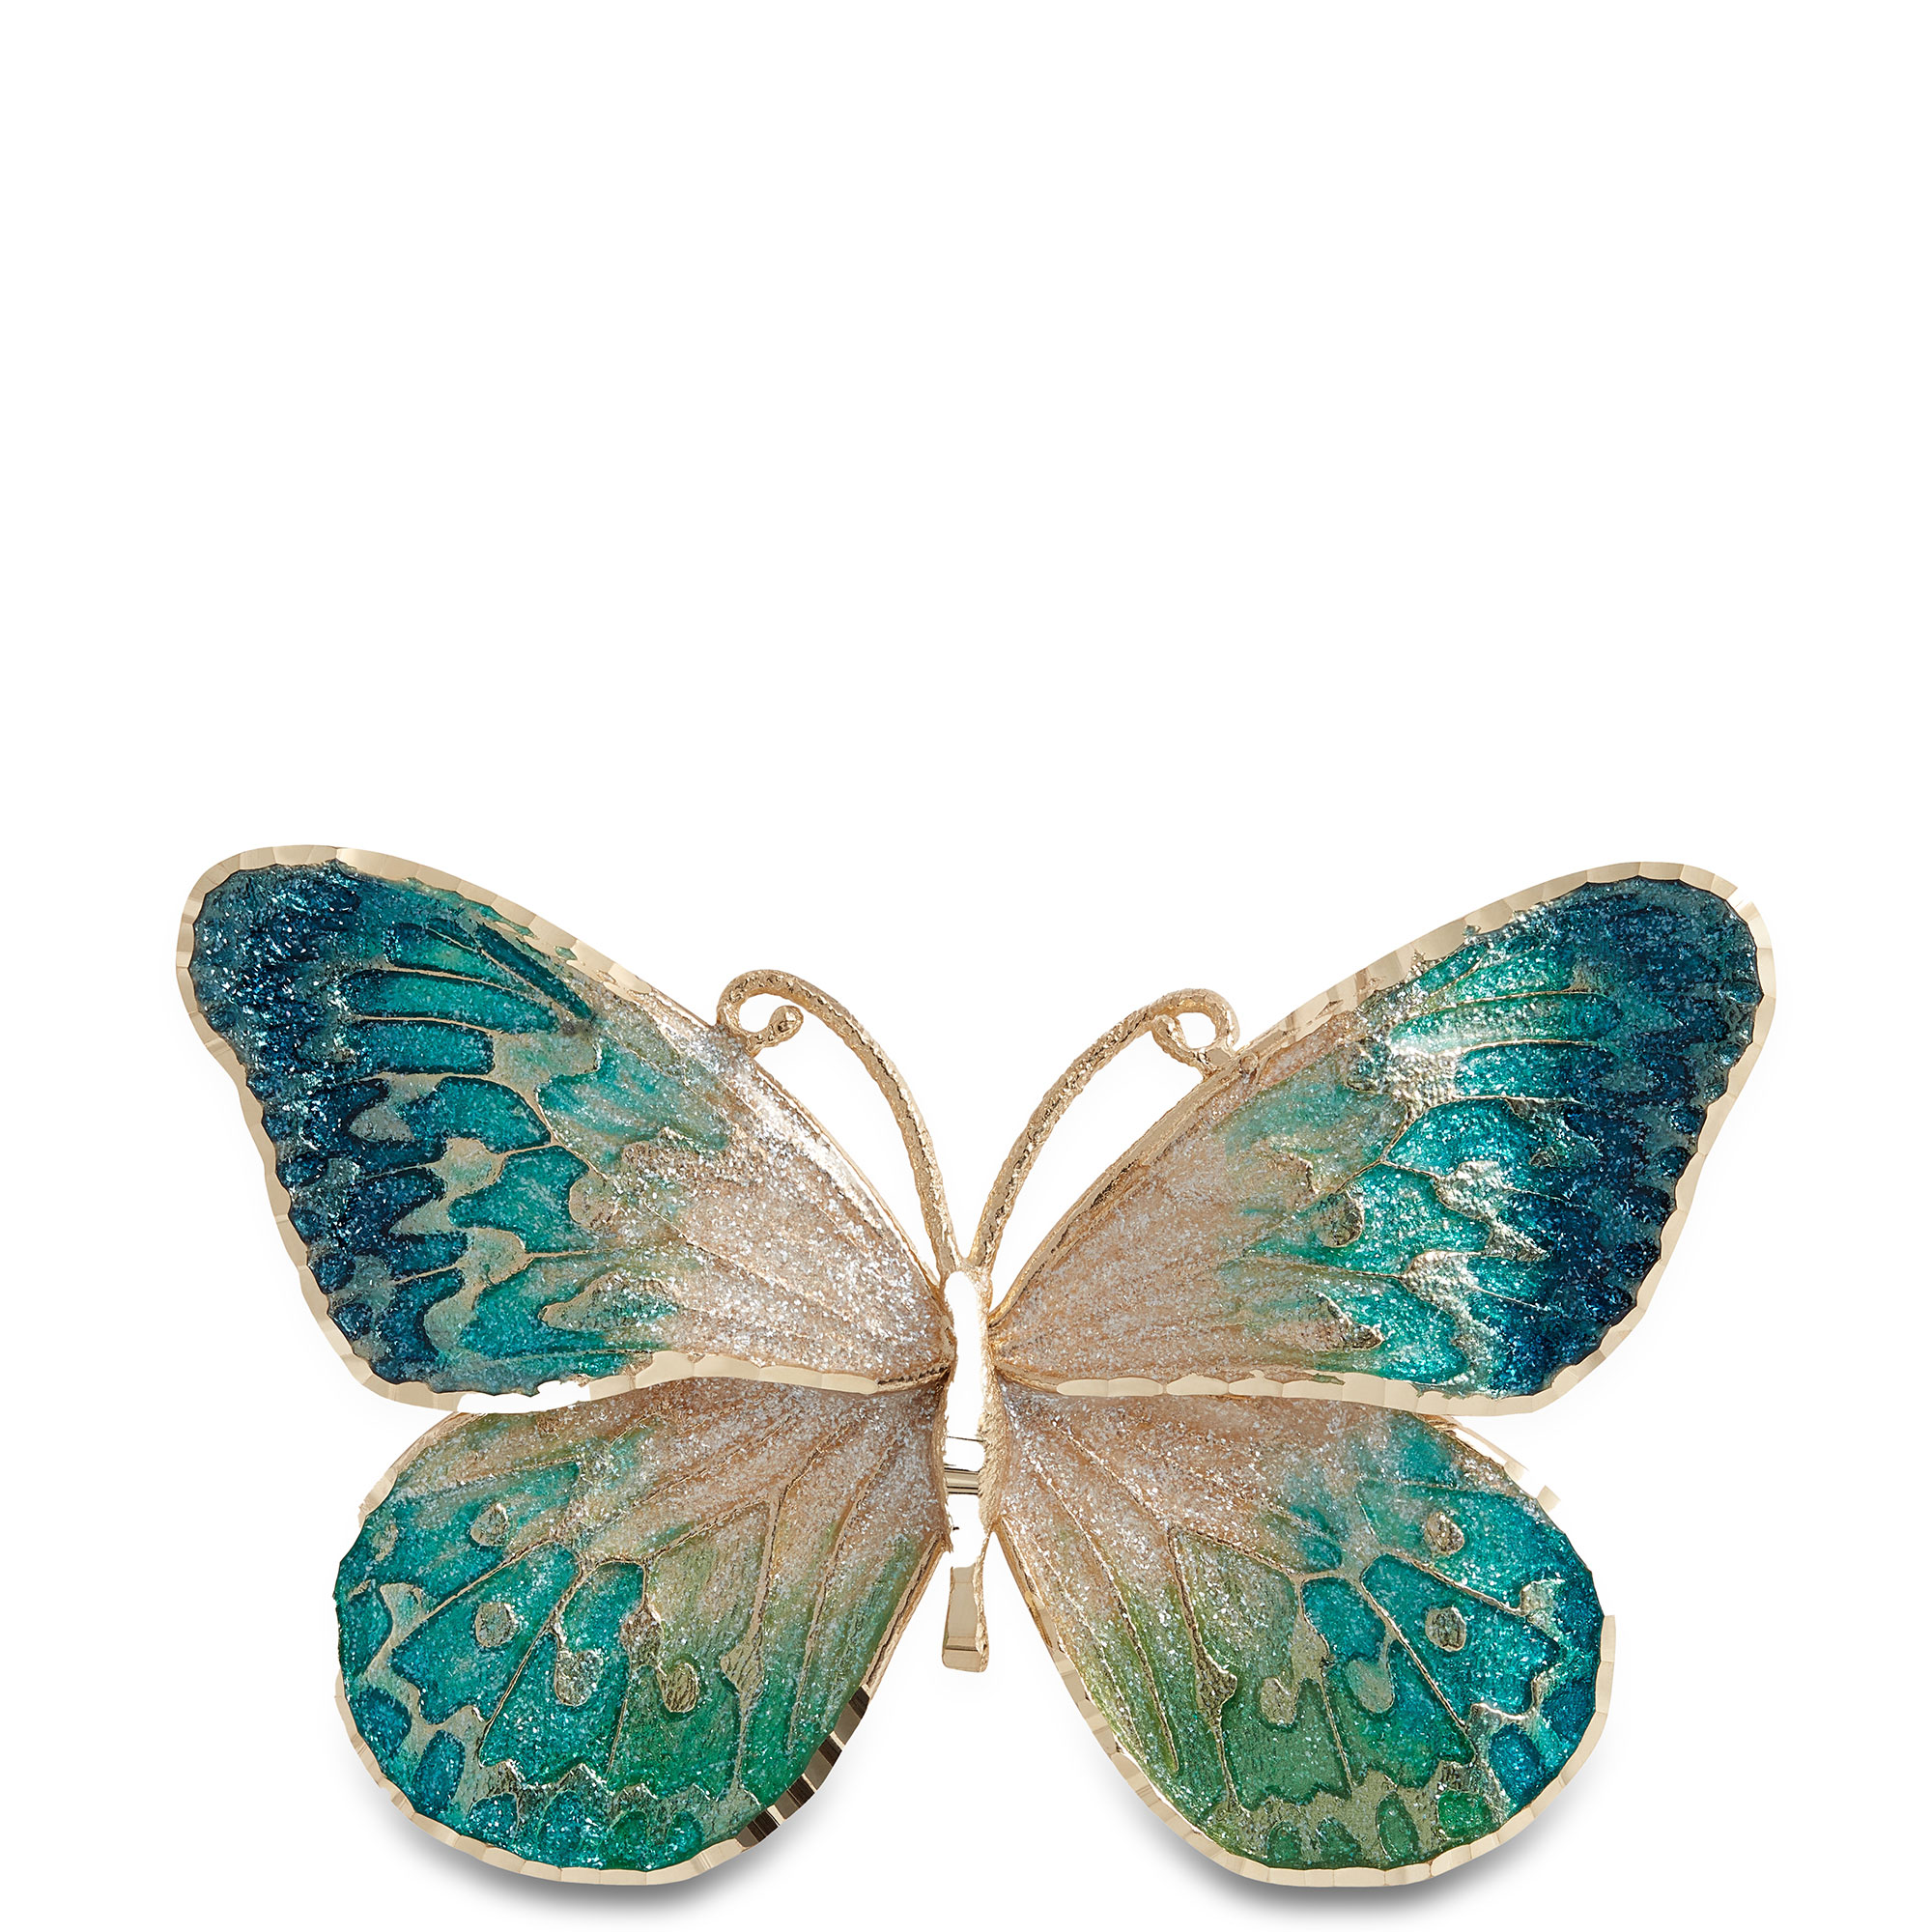 Butterfly Enamel Pin, Blue, Orange, Soft Enamel Pin, Collectible, Gift,  Birthday Present